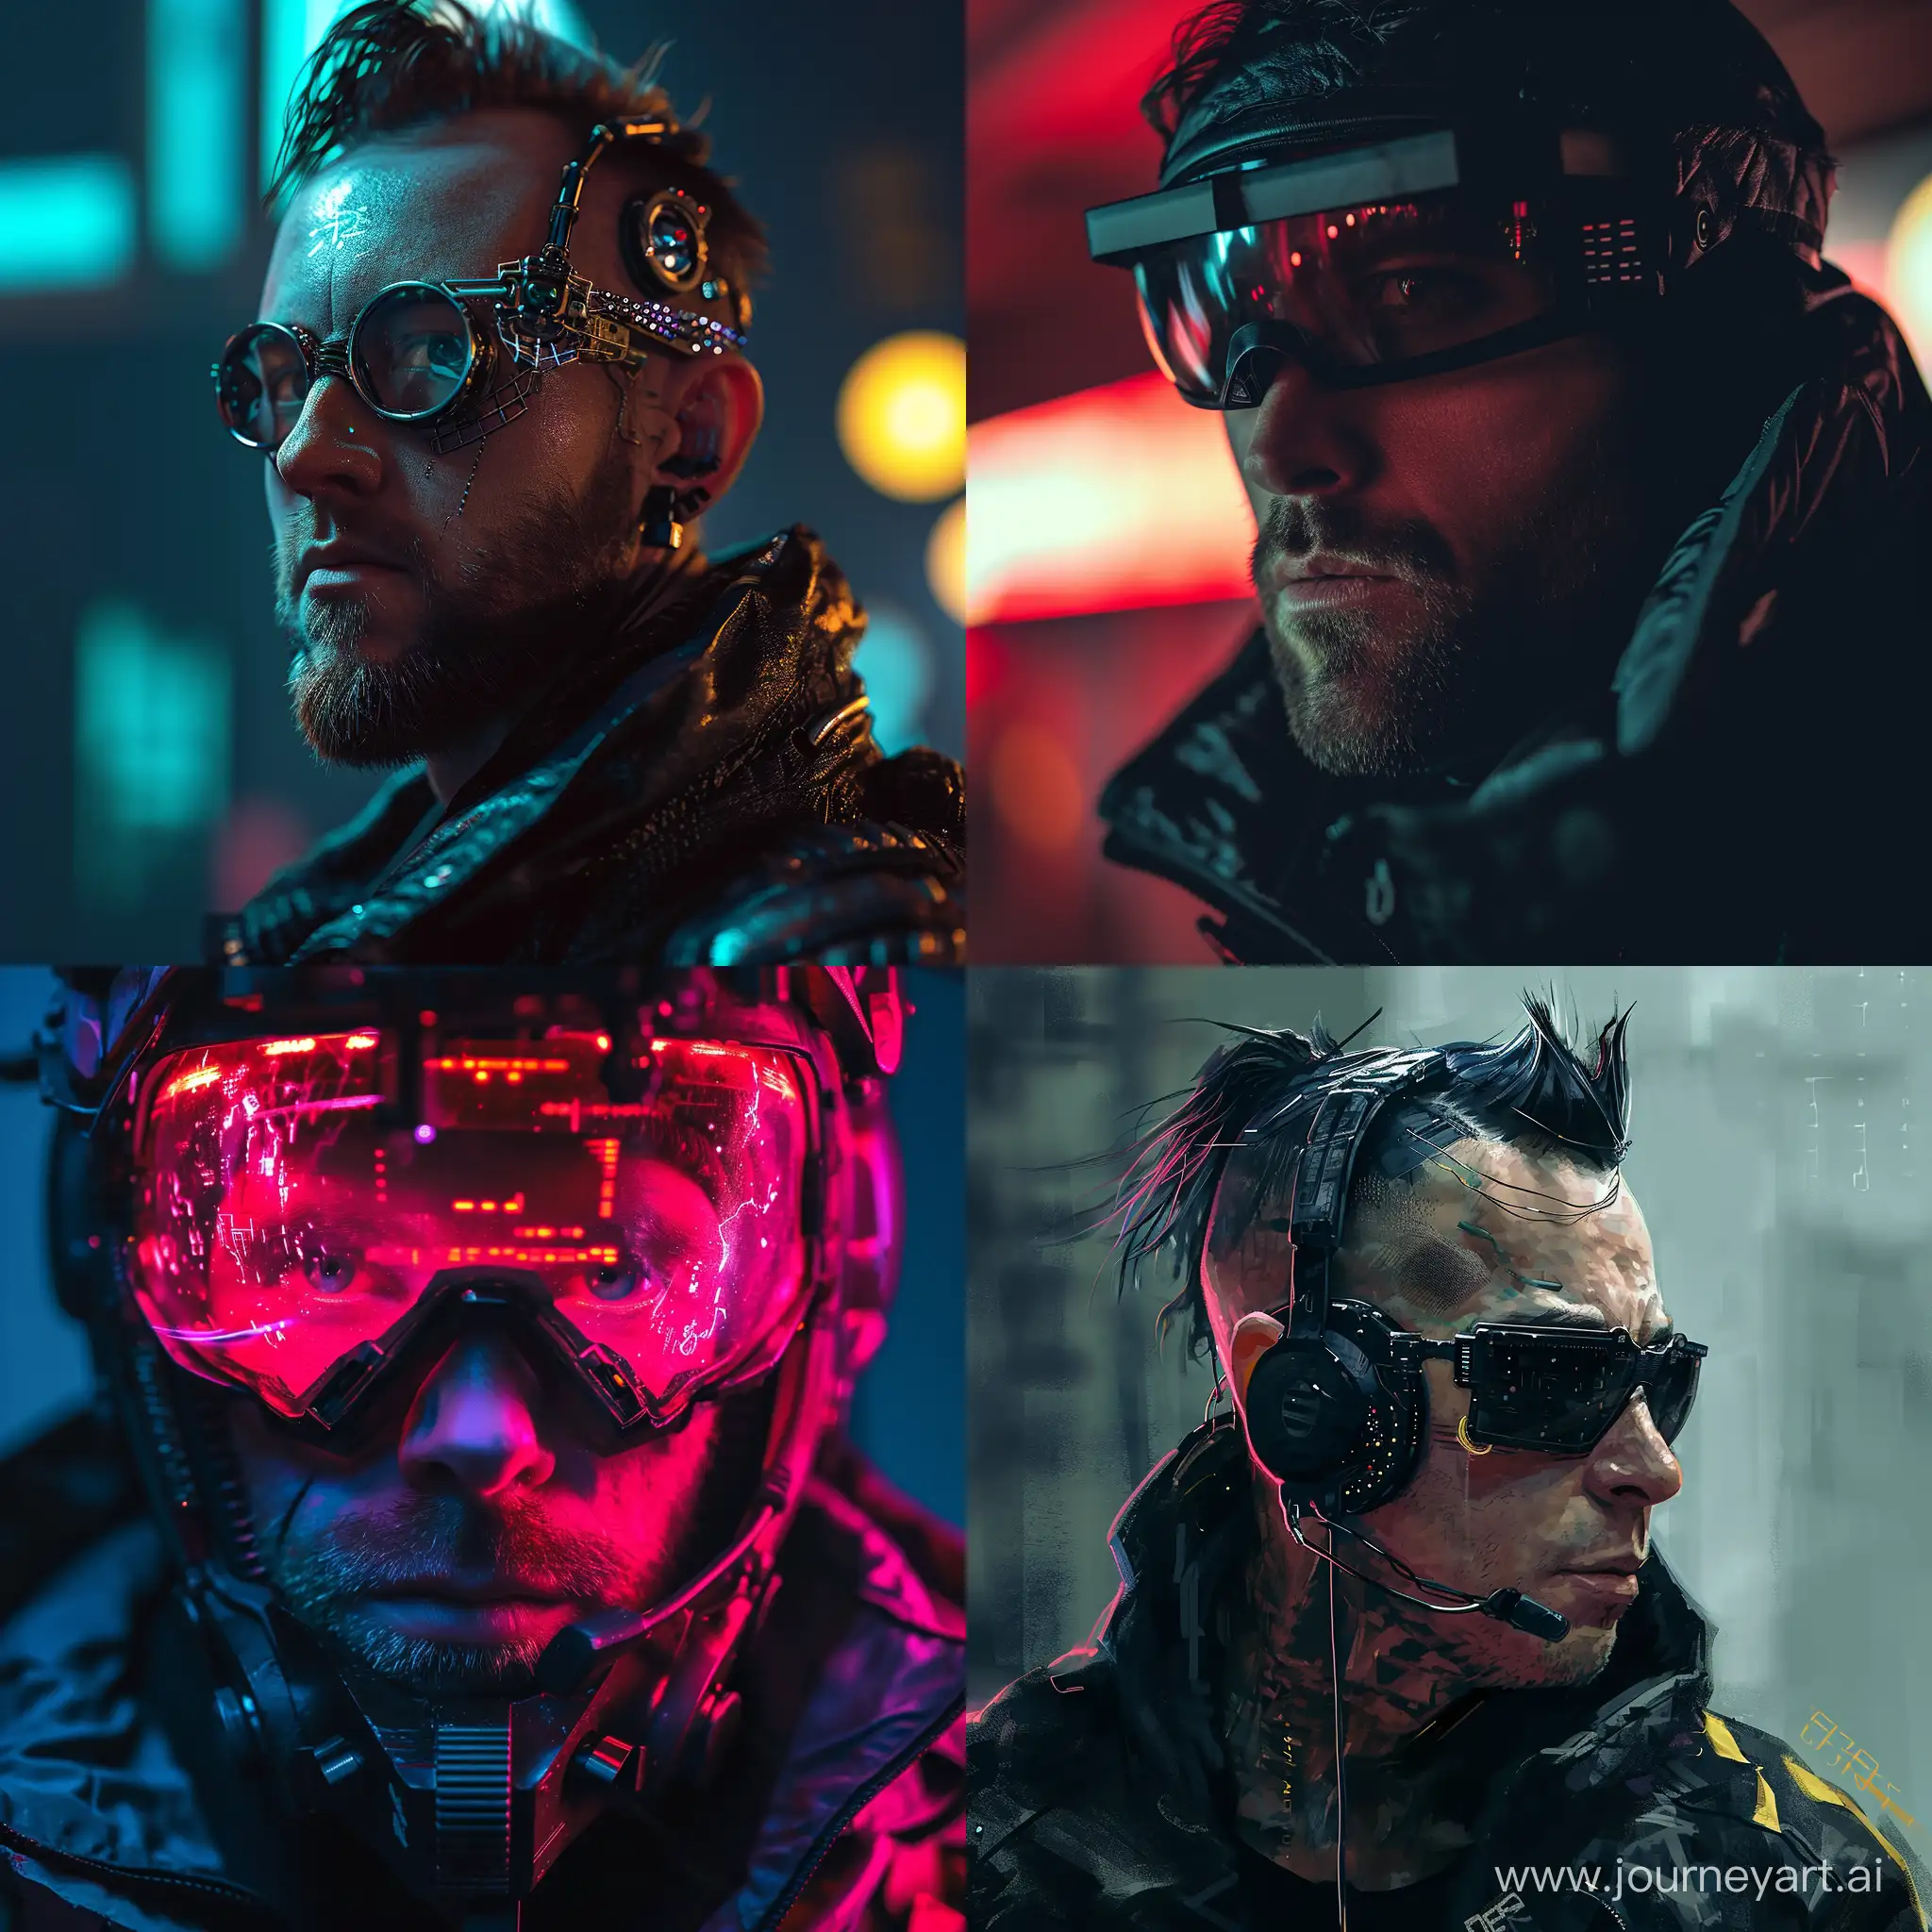 Futuristic-Cyberpunk-Man-Portrait-in-HighTech-Environment